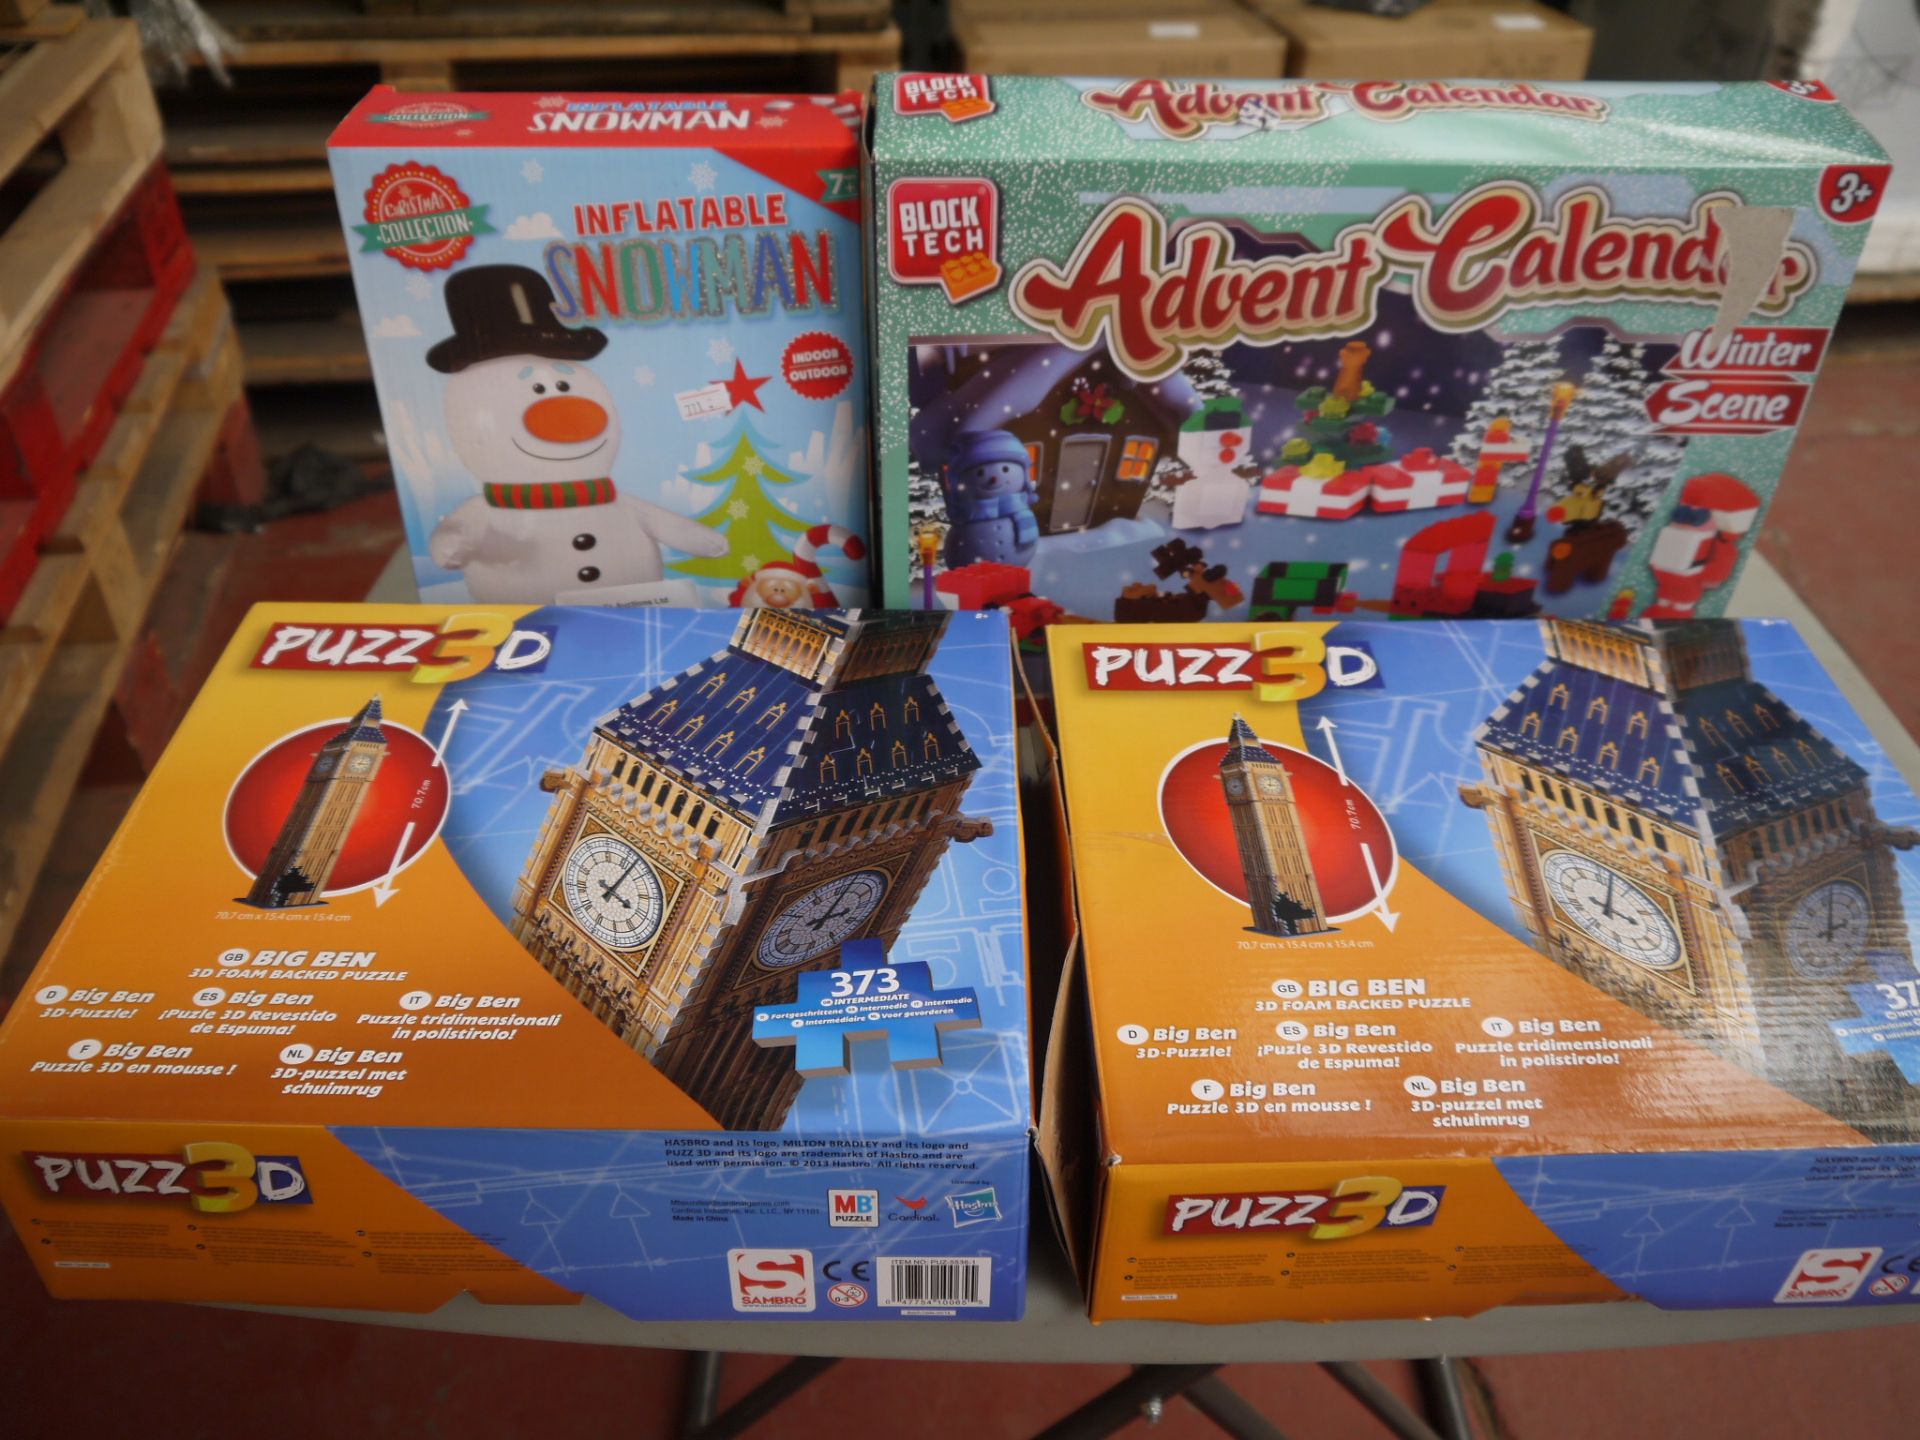 1x Grafix Inflatable Snowman. 1x BlockTech Advent Calendar. And 2x Big Ben 3D Puzzles